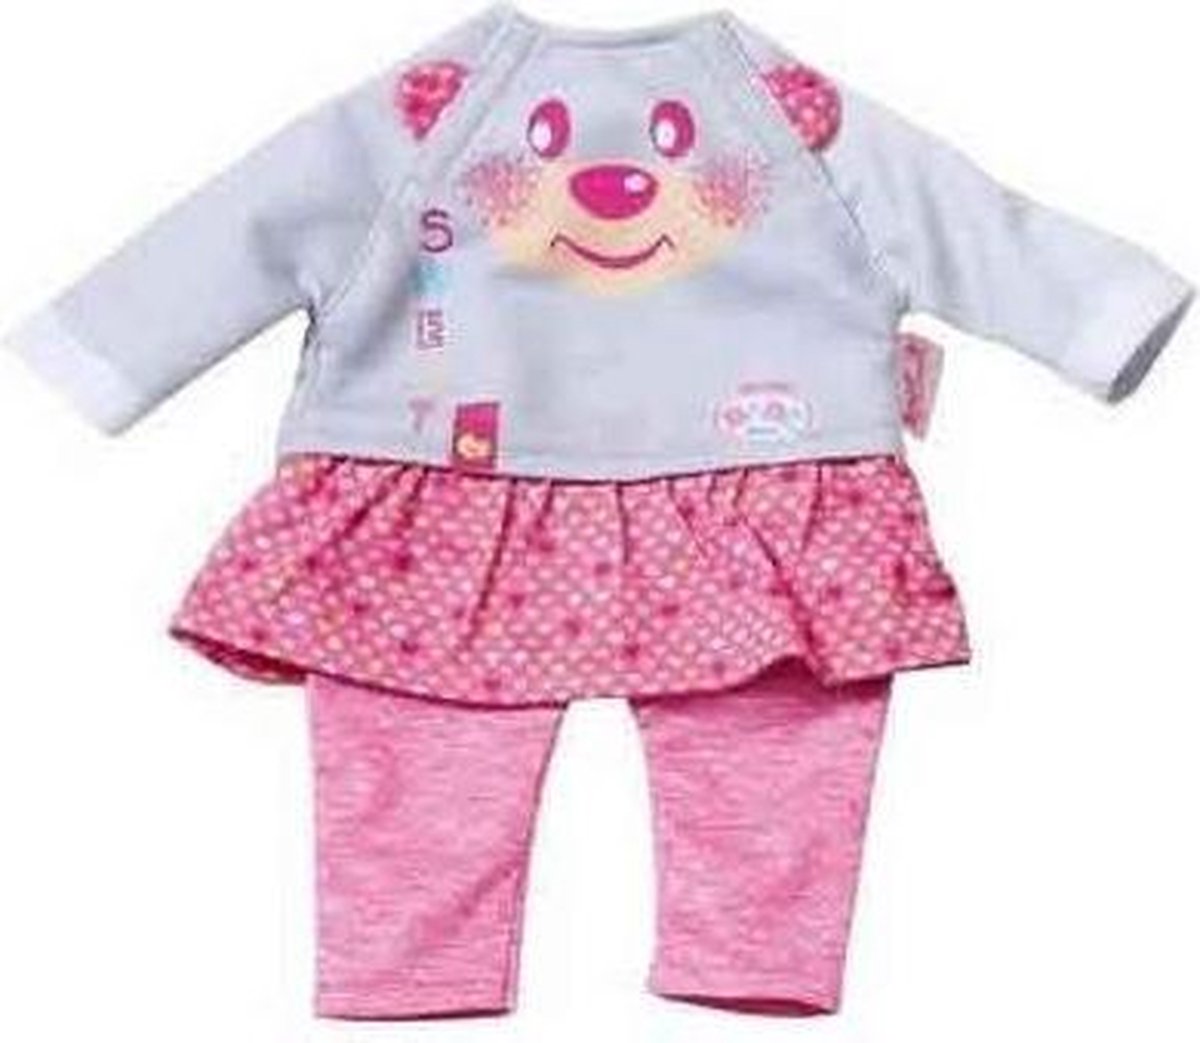 Детская одежда кукла. Одежда Zapf Creation Baby born. Zapf Creation одежда для куклы. Одежда для кукол Беби Борн. Одежда для кукол баби Борн.